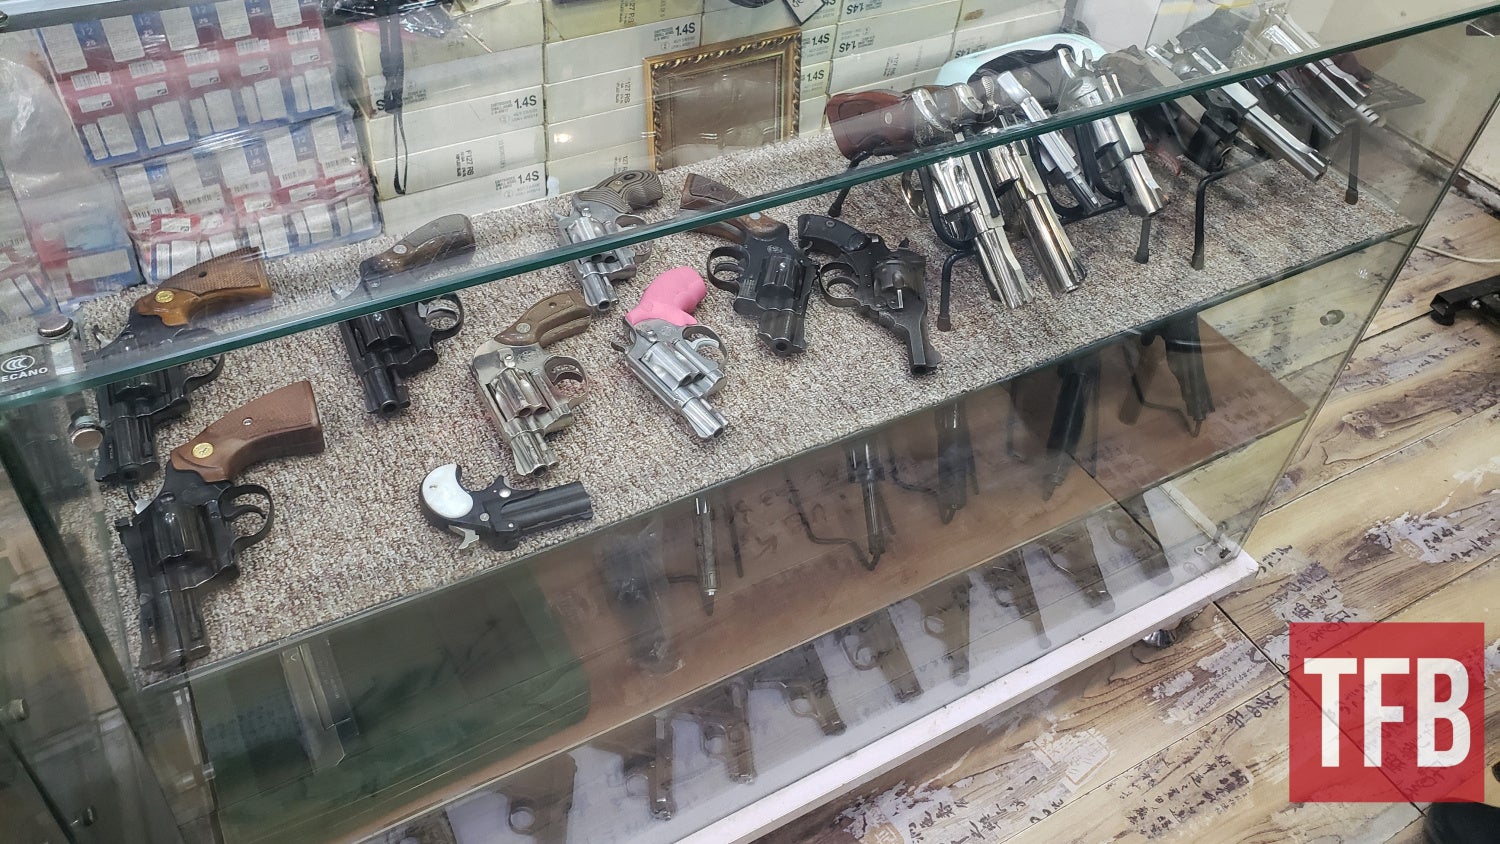 Handgun display in one of the Baghdad shops